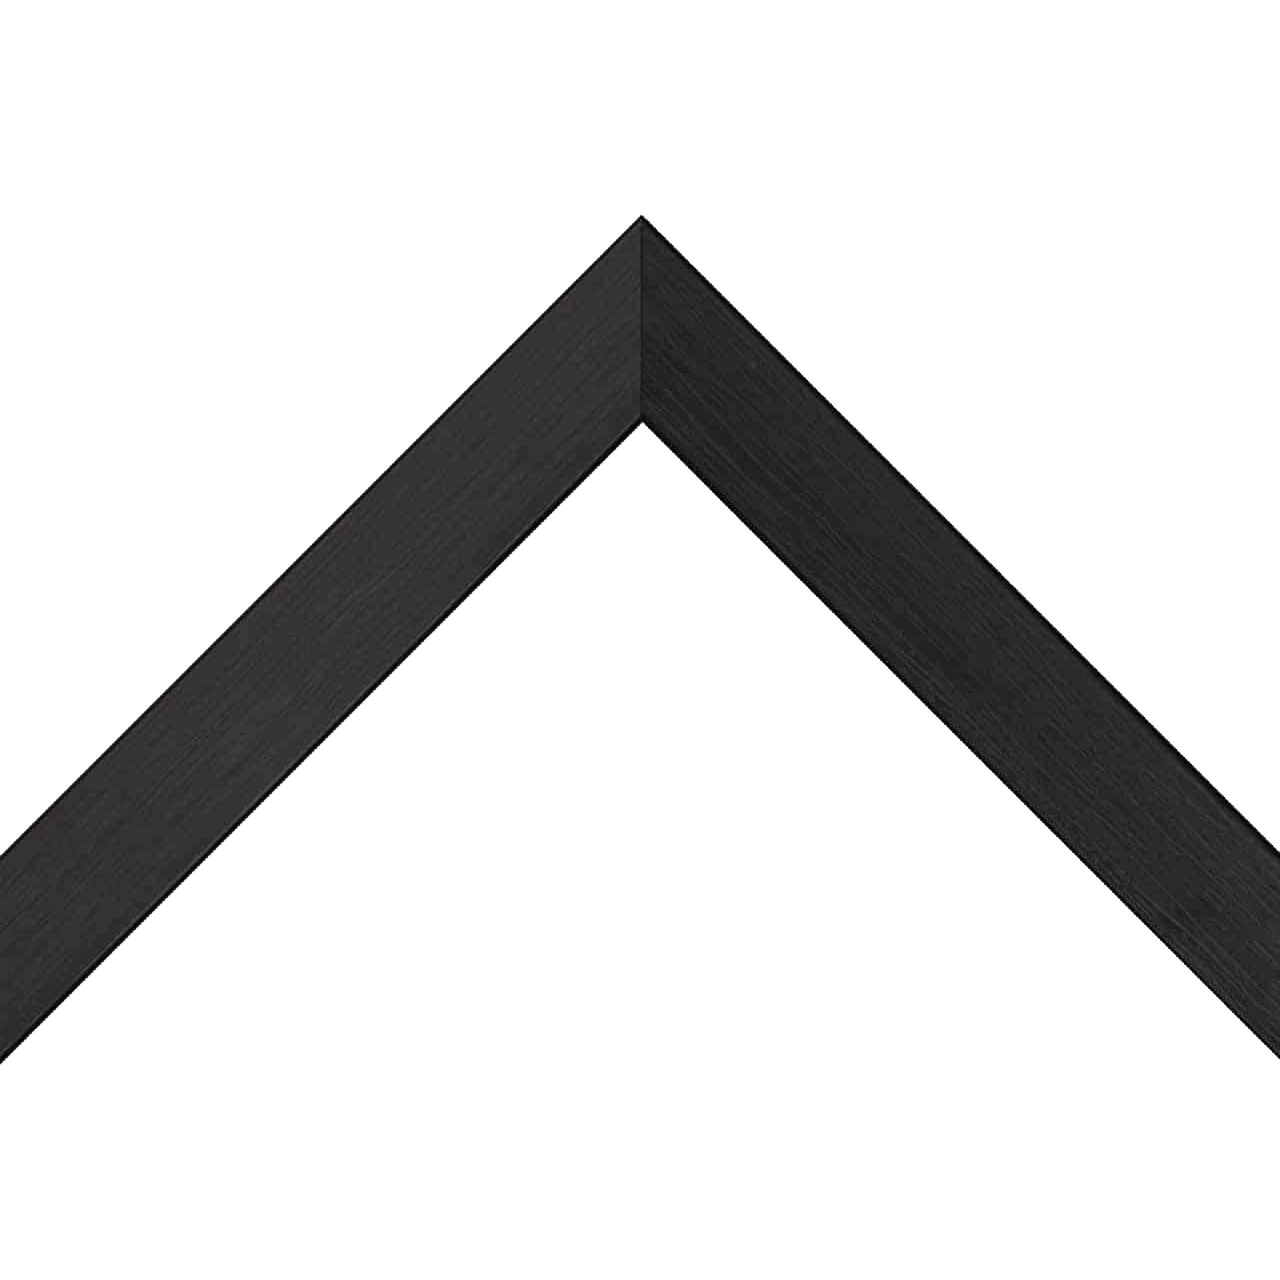 Premium Black Timber Finish Square Picture Frame for 35.5 x 35.5cm Artwork